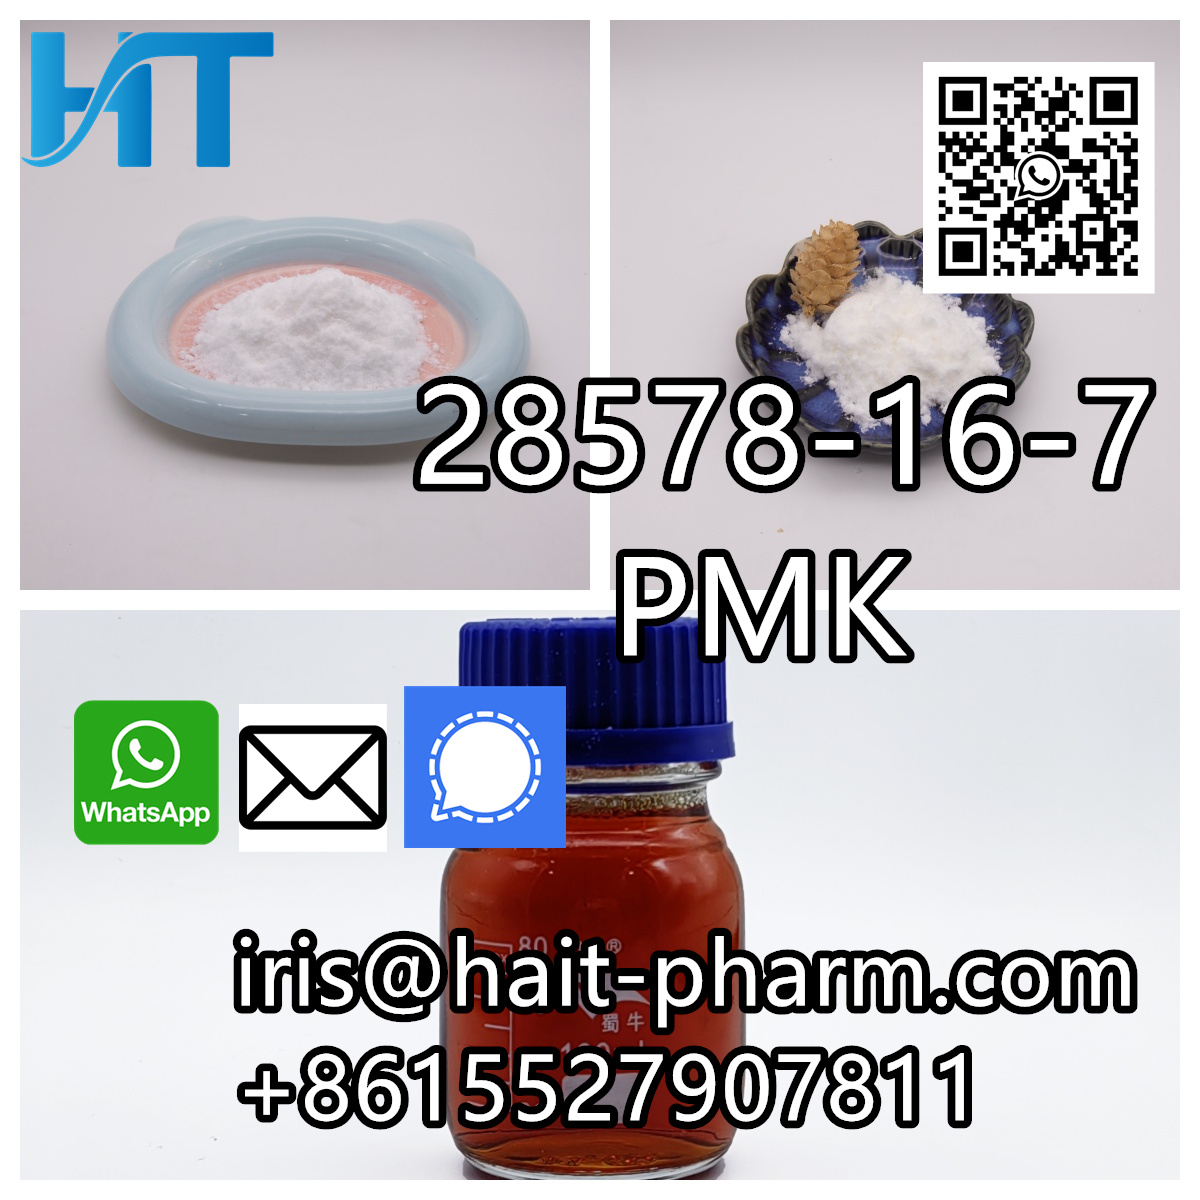 CAS 28578167 PMK ethyl glycidate with fast delivery - South Dakota - Aberdeen ID1545356